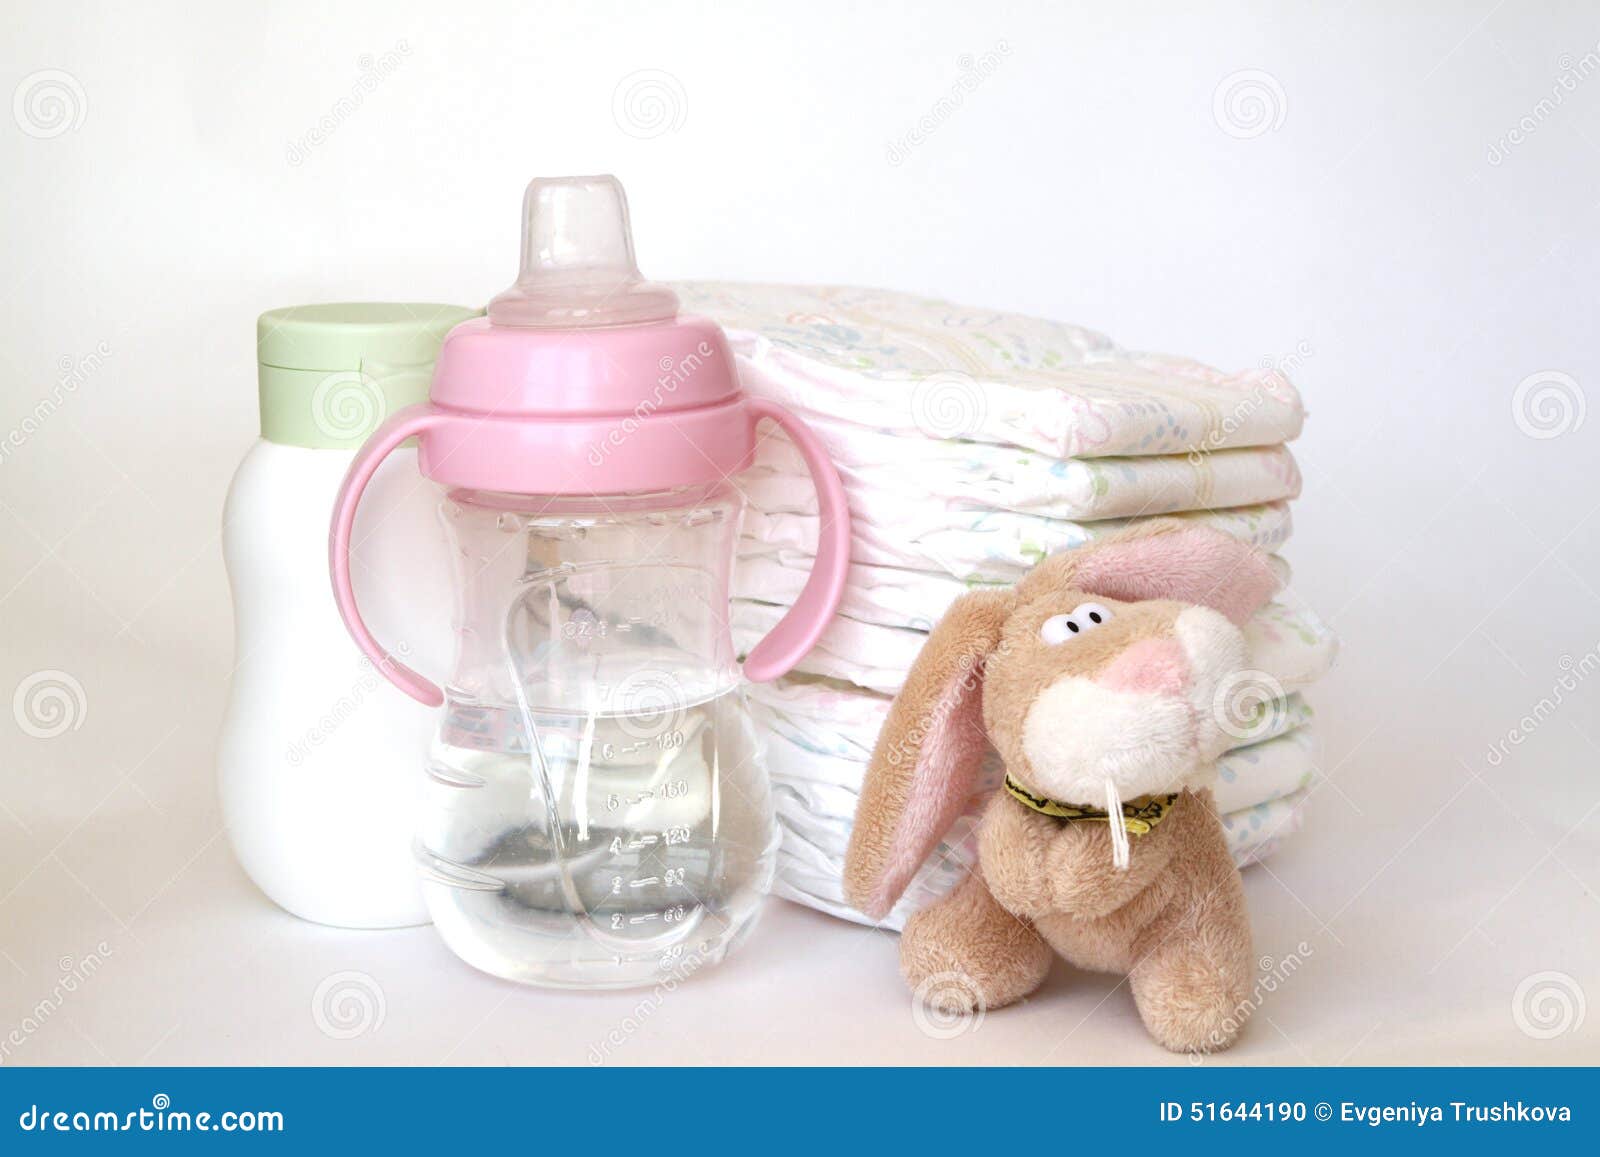 Baby staff stock photo. Image of babies, bottle, baby - 51644190